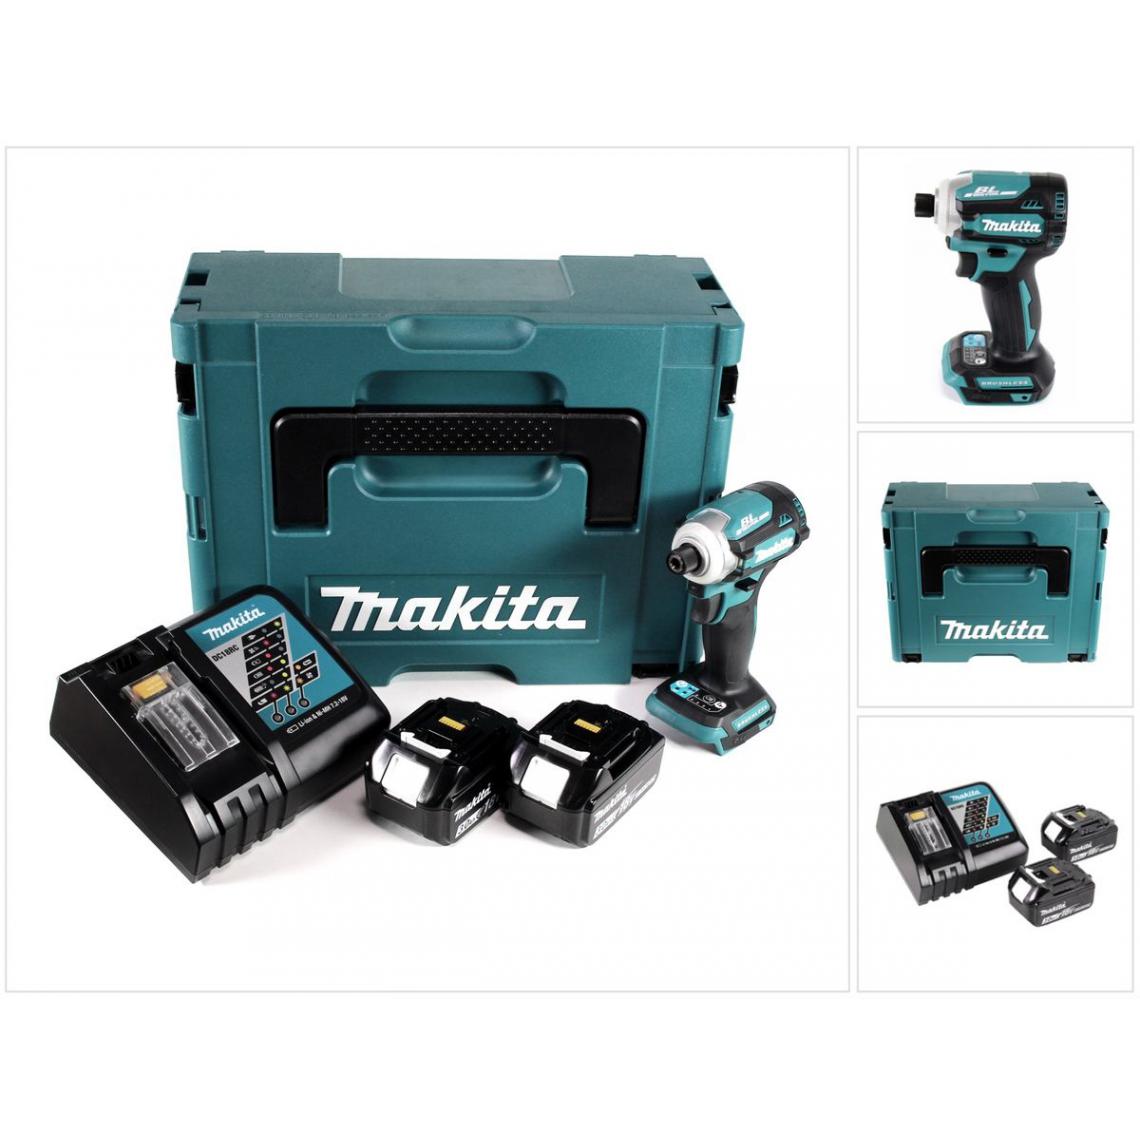 Makita - Makita DTD 171 RFJ Visseuse à percussion sans fil 18V 170Nm 1/4" Brushless + Coffret de transport Makpac + 2x Batteries 3,0Ah + Chargeur - Perceuses, visseuses sans fil